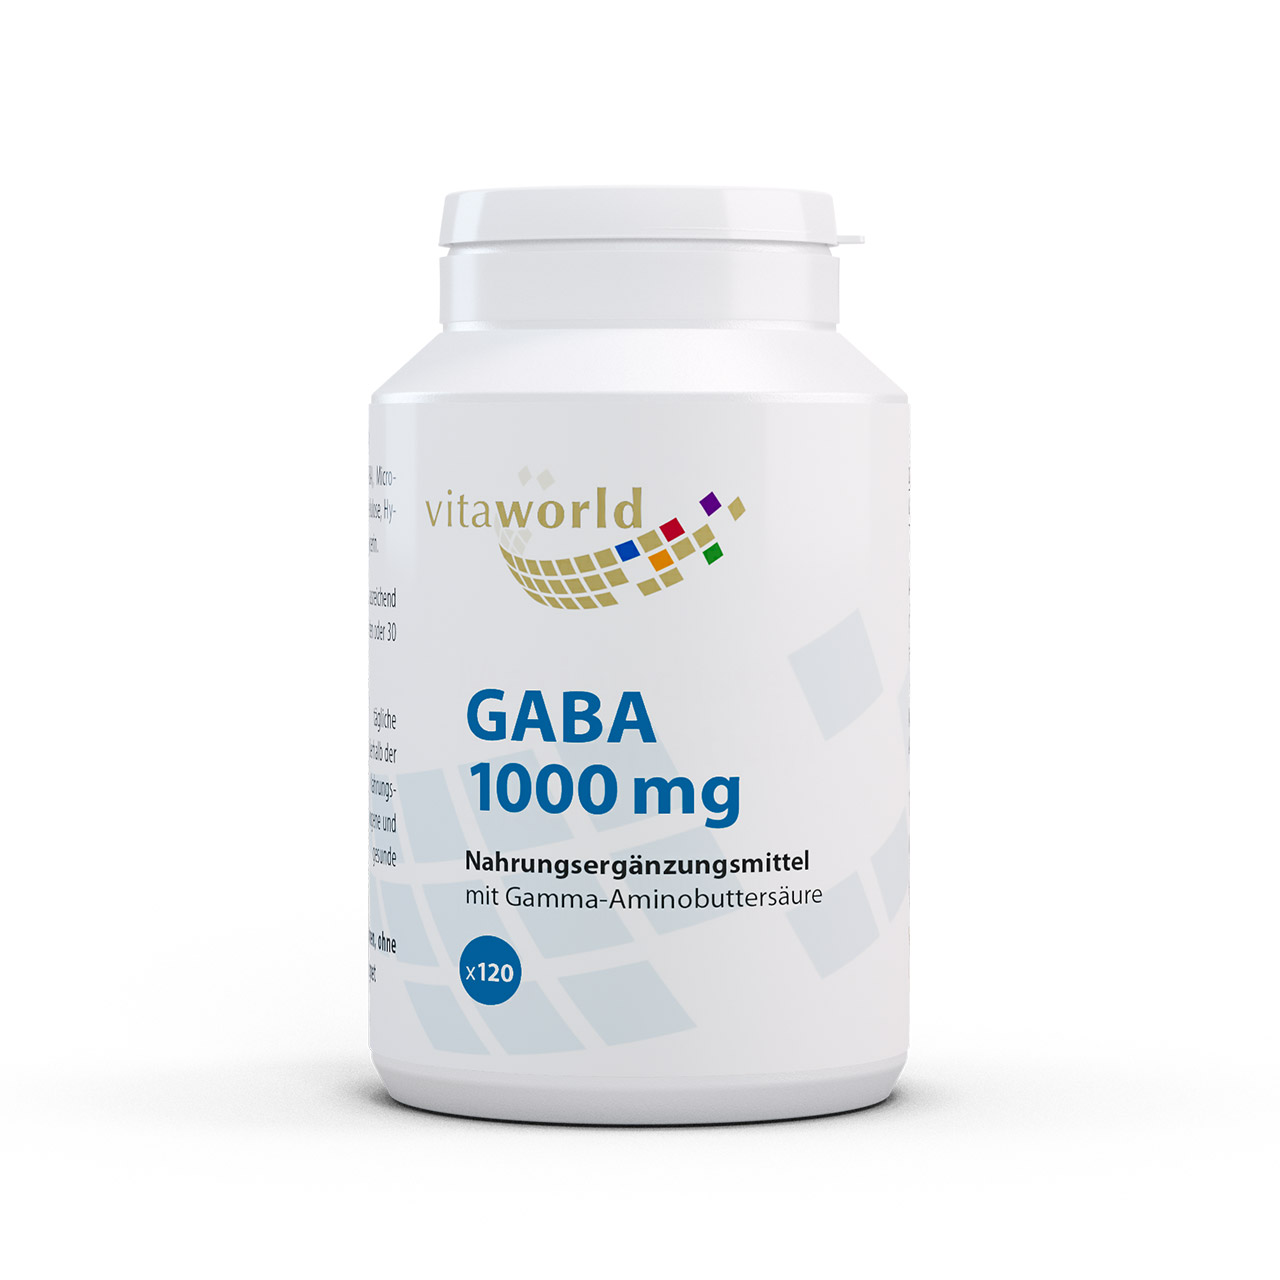 GABA 1000 mg (120 tablets)